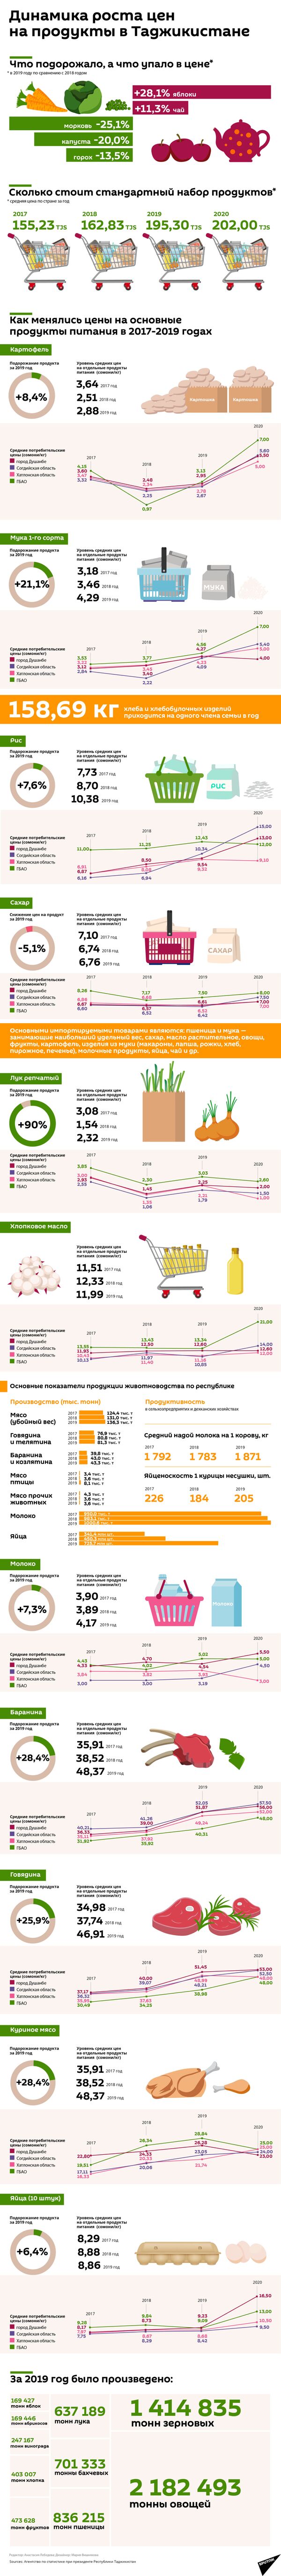 Динамика роста цен на продукты в Таджикистане - Sputnik Таджикистан